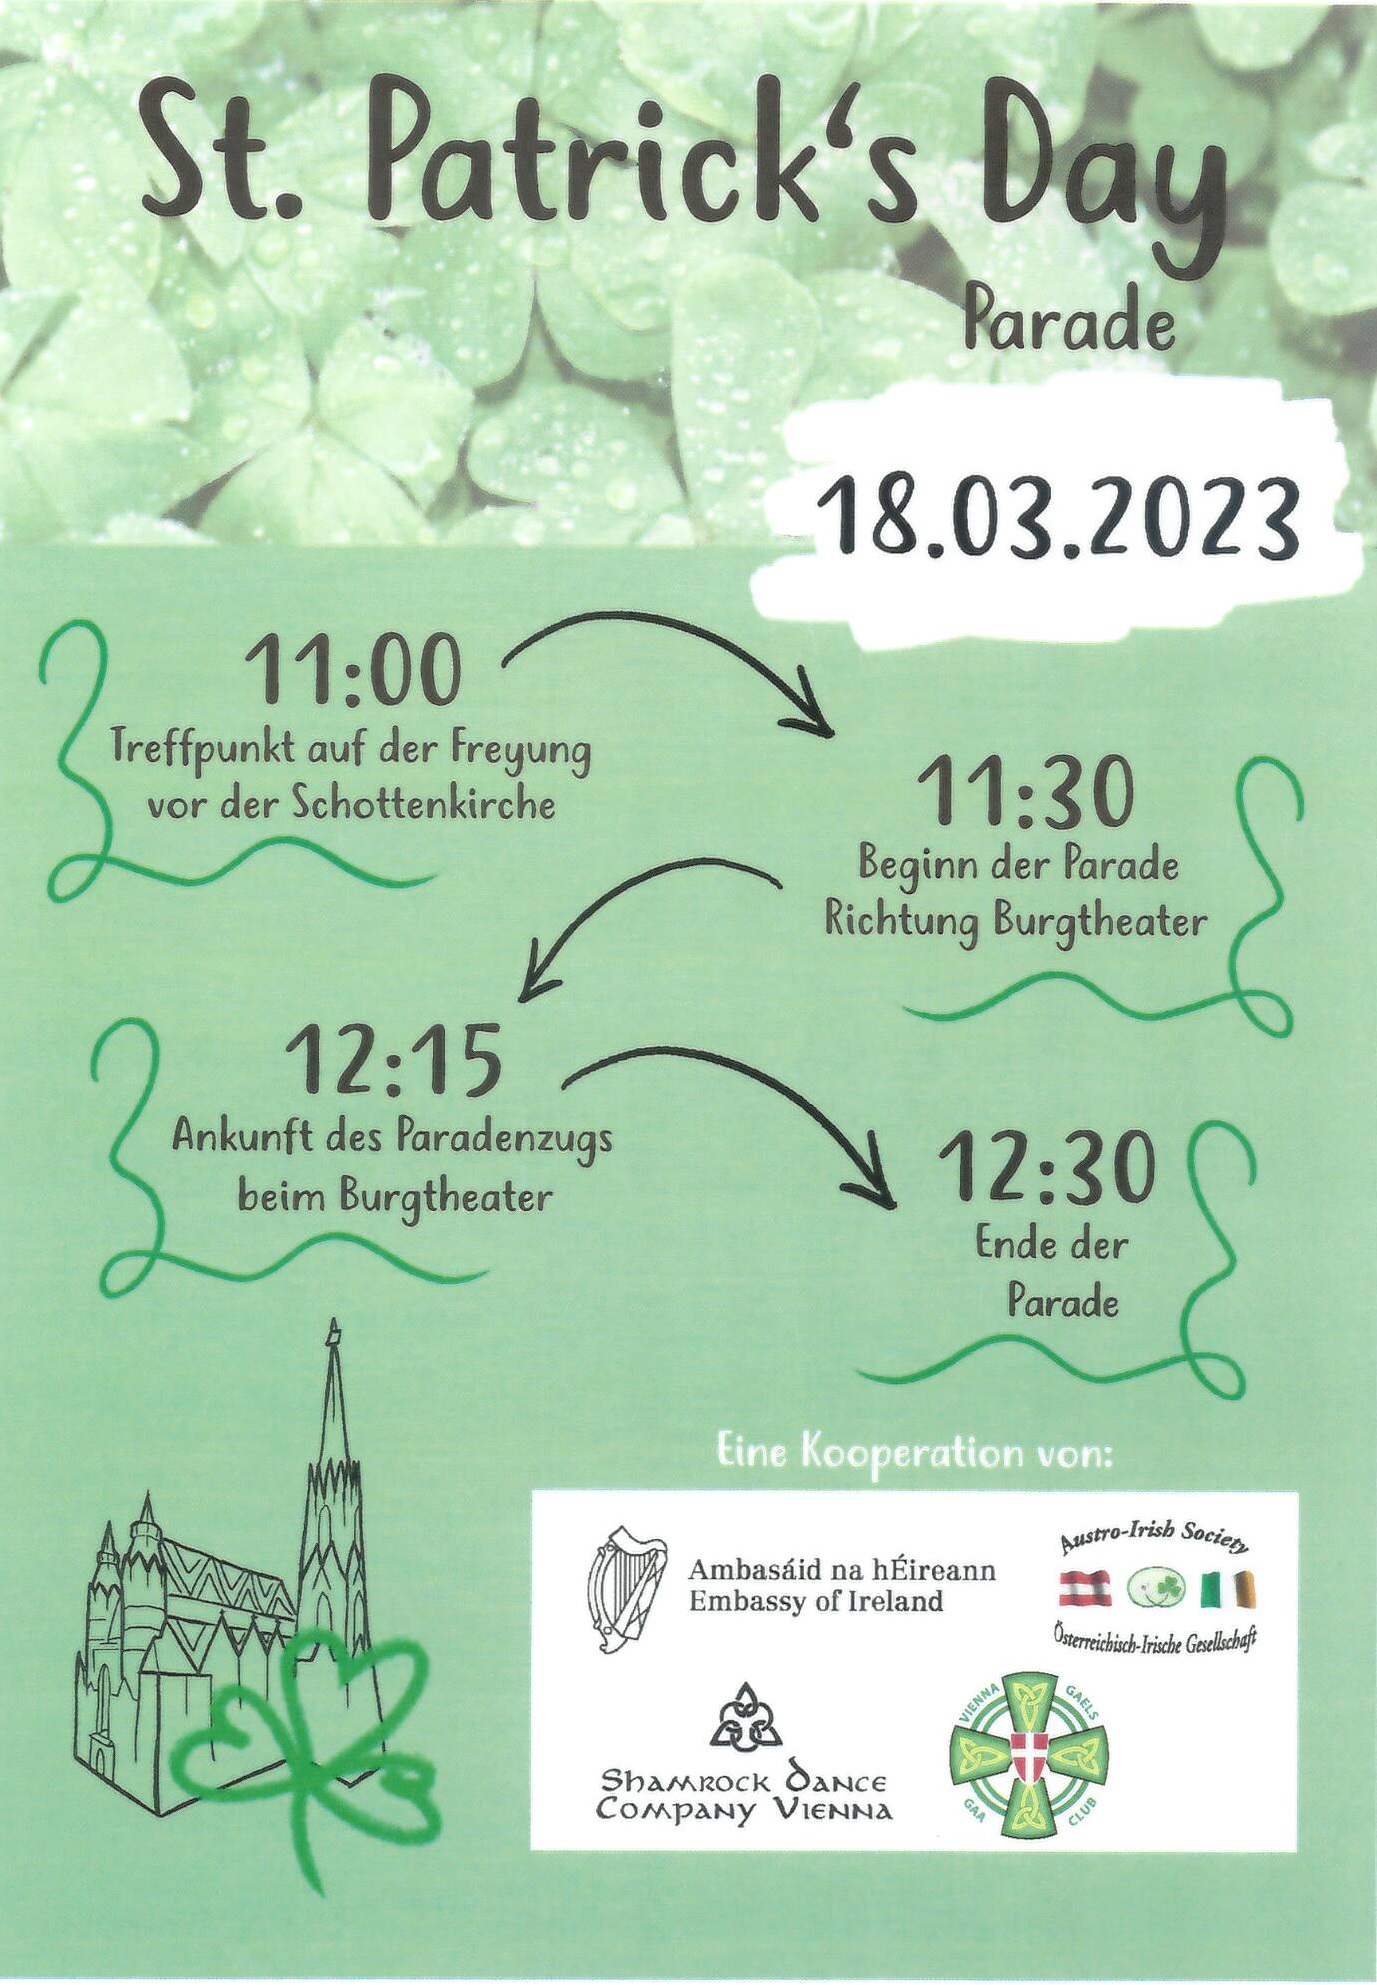 St. Patrick's Day Parade Vienna 2023